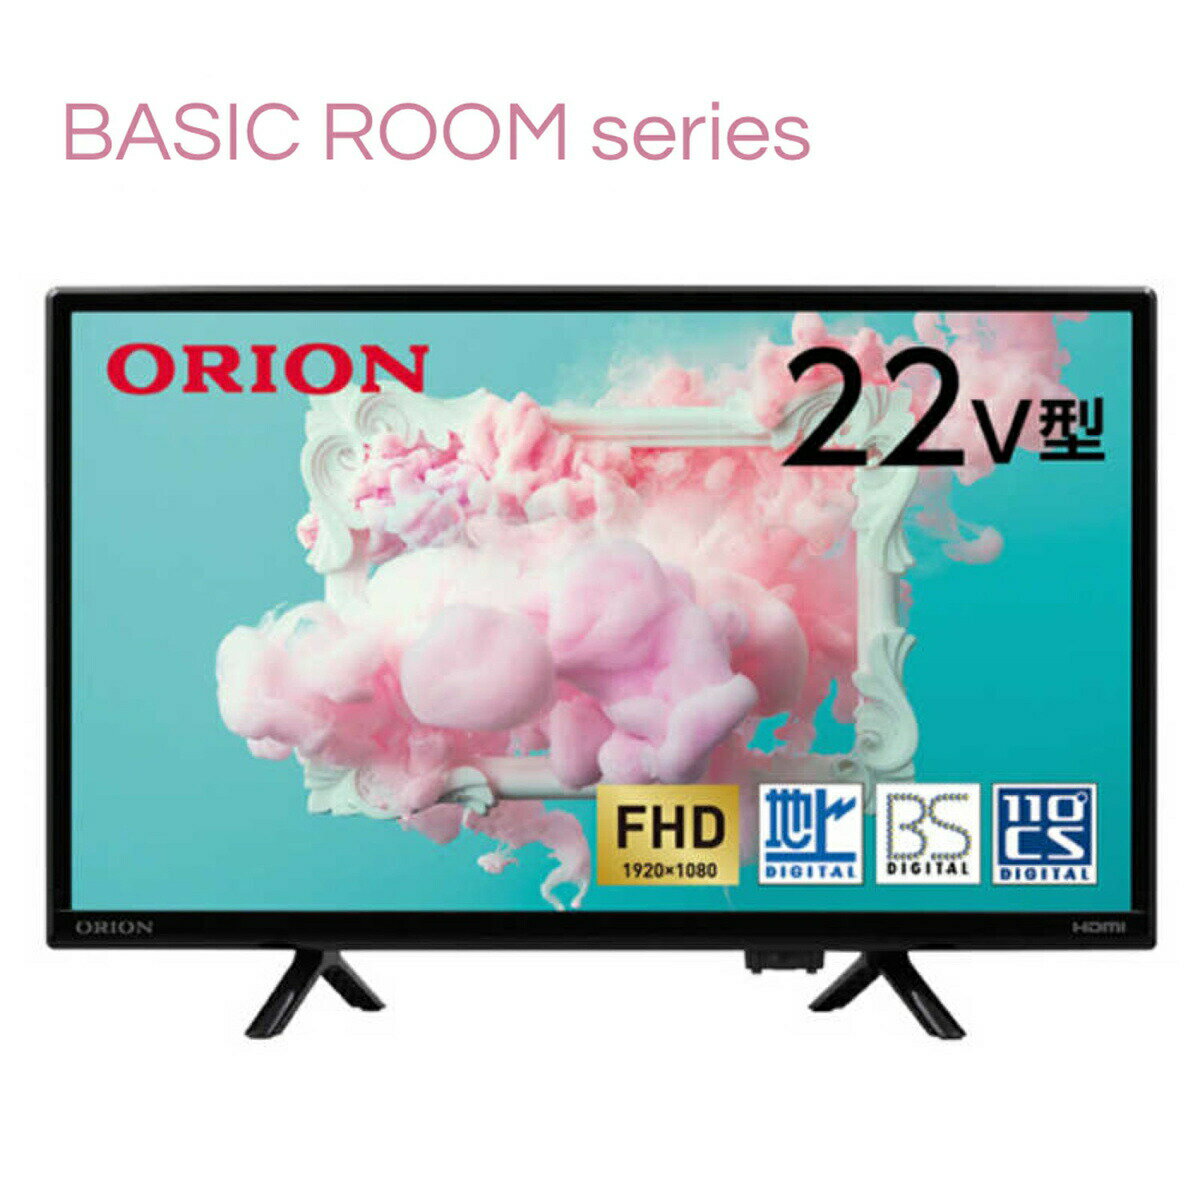 ORION OL22CD401 22V型 フルハイビジョン 液晶テレビ リモコン 外付けHDD録画対応 裏録 HDMI 音声モード イコライザー機能 ブルーライトガード 地上波 BS フルHD FHD オリオン (R)